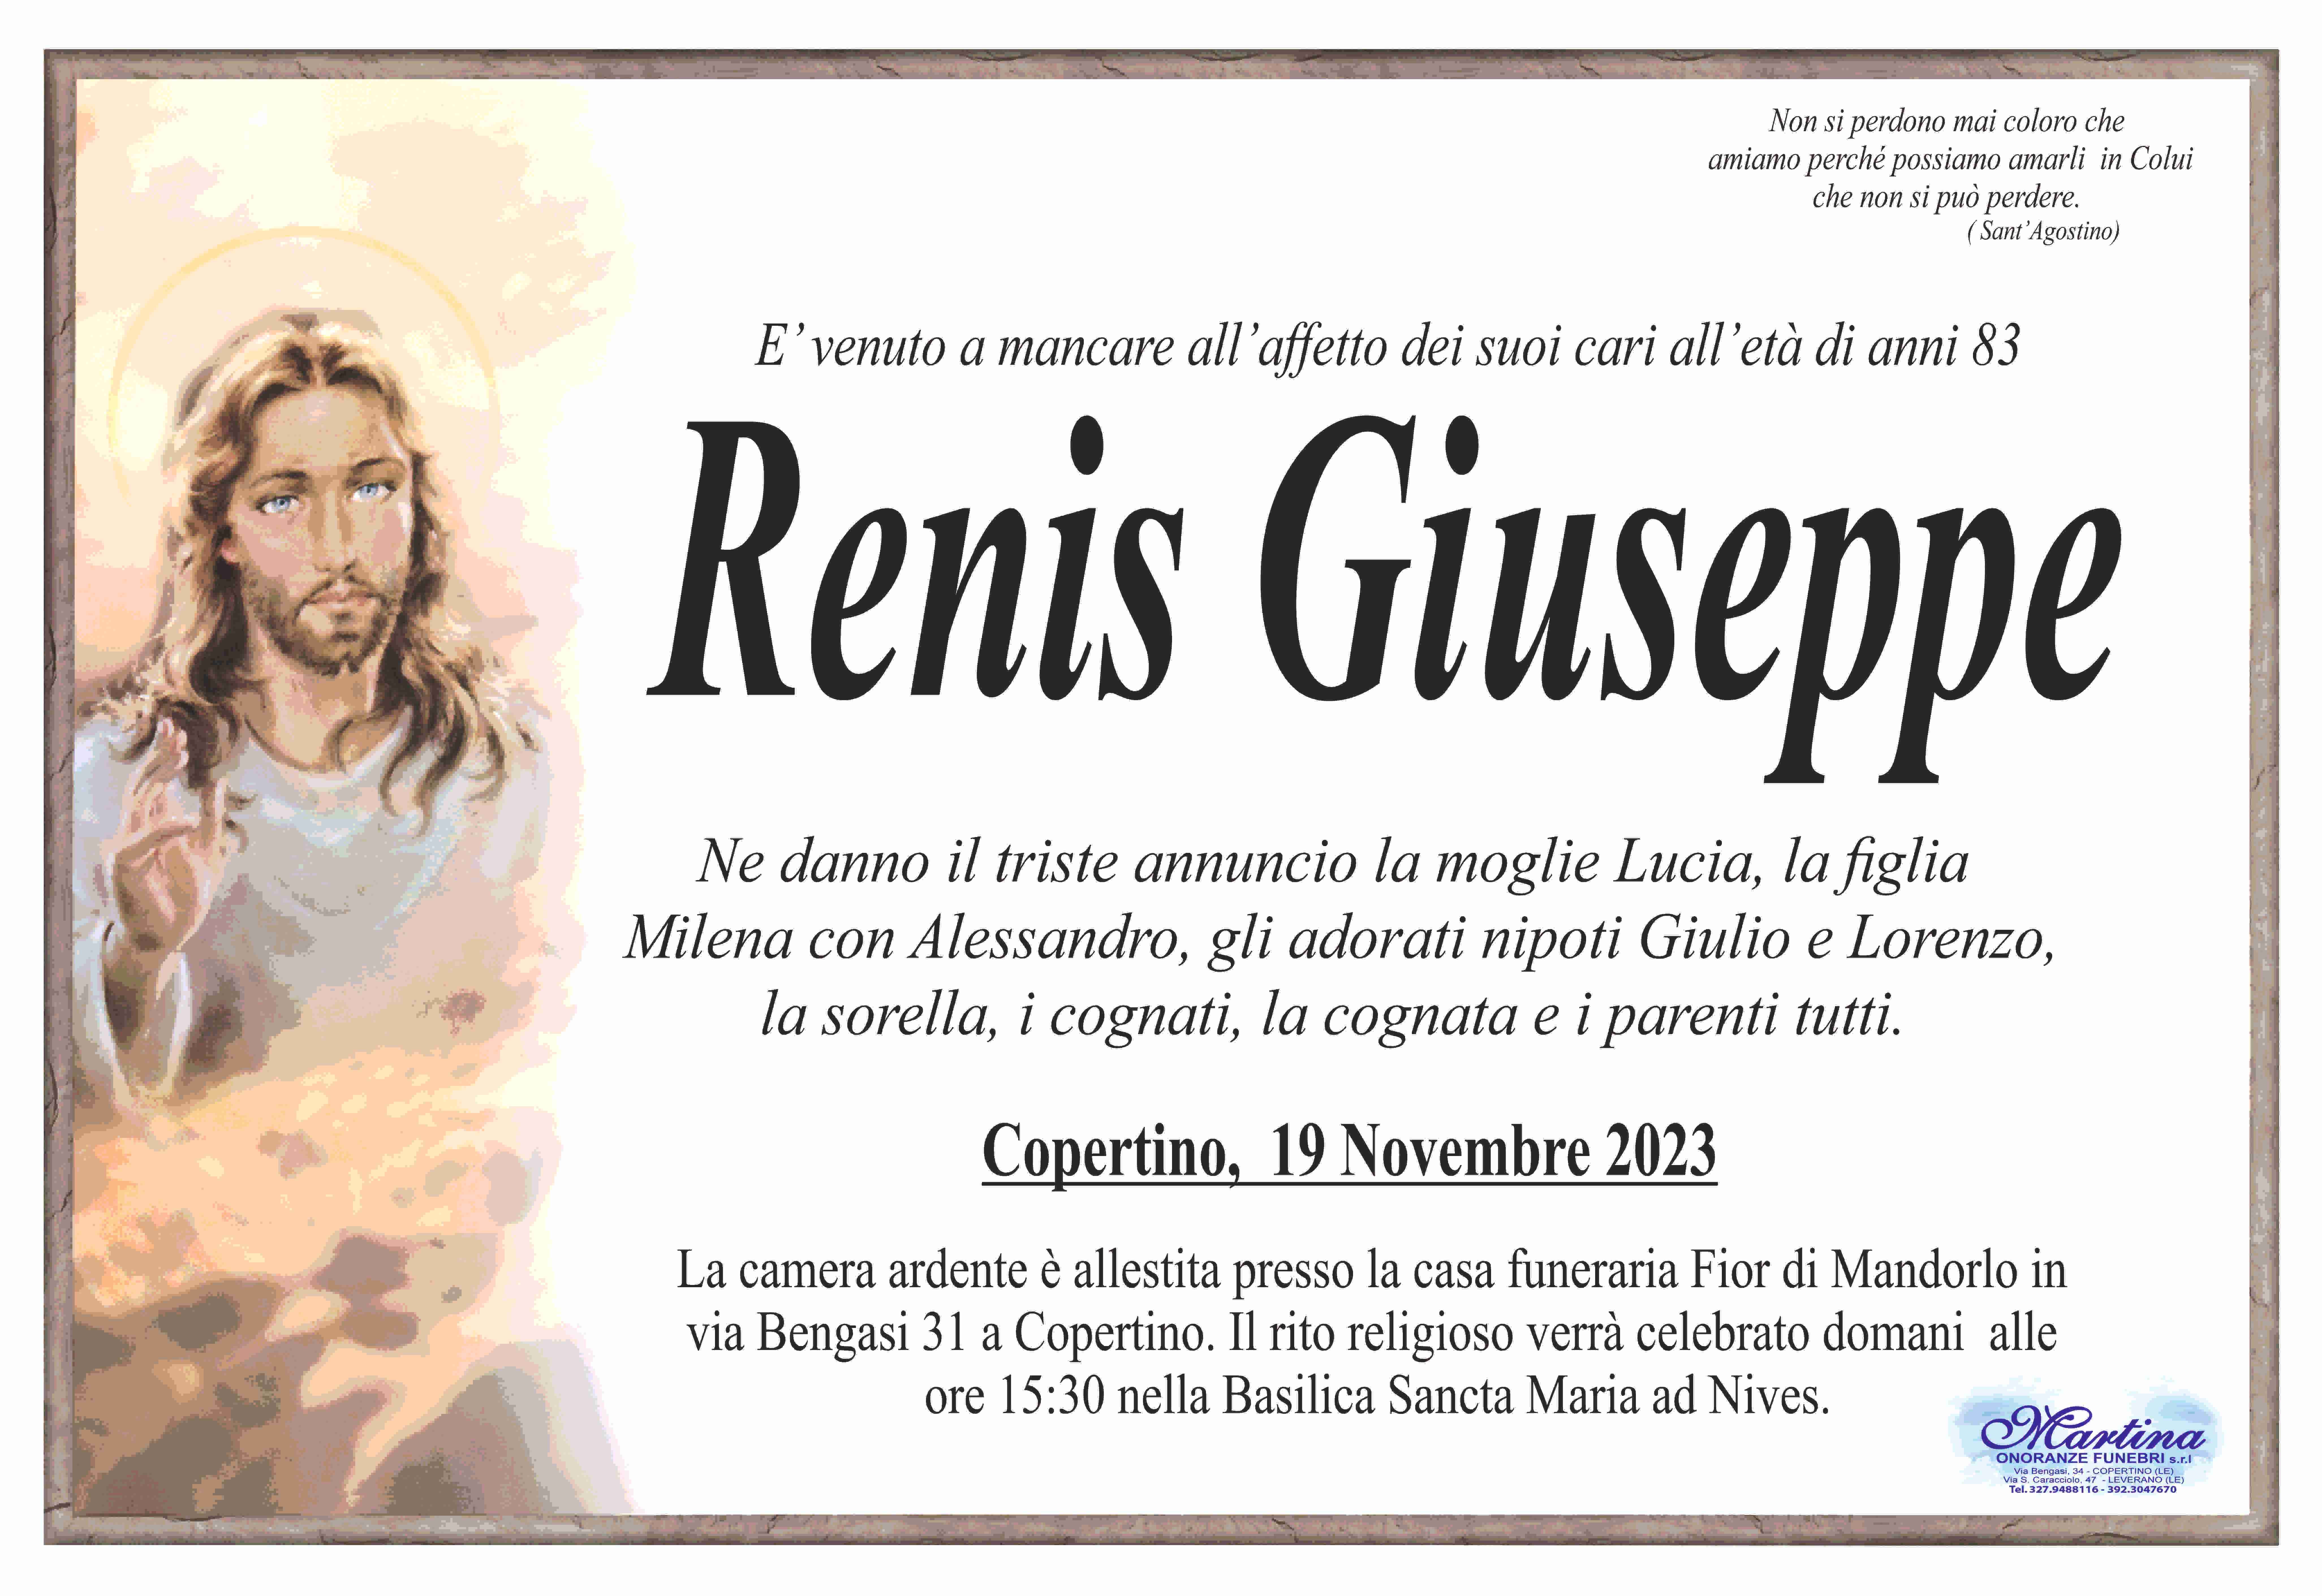 Giuseppe Renis